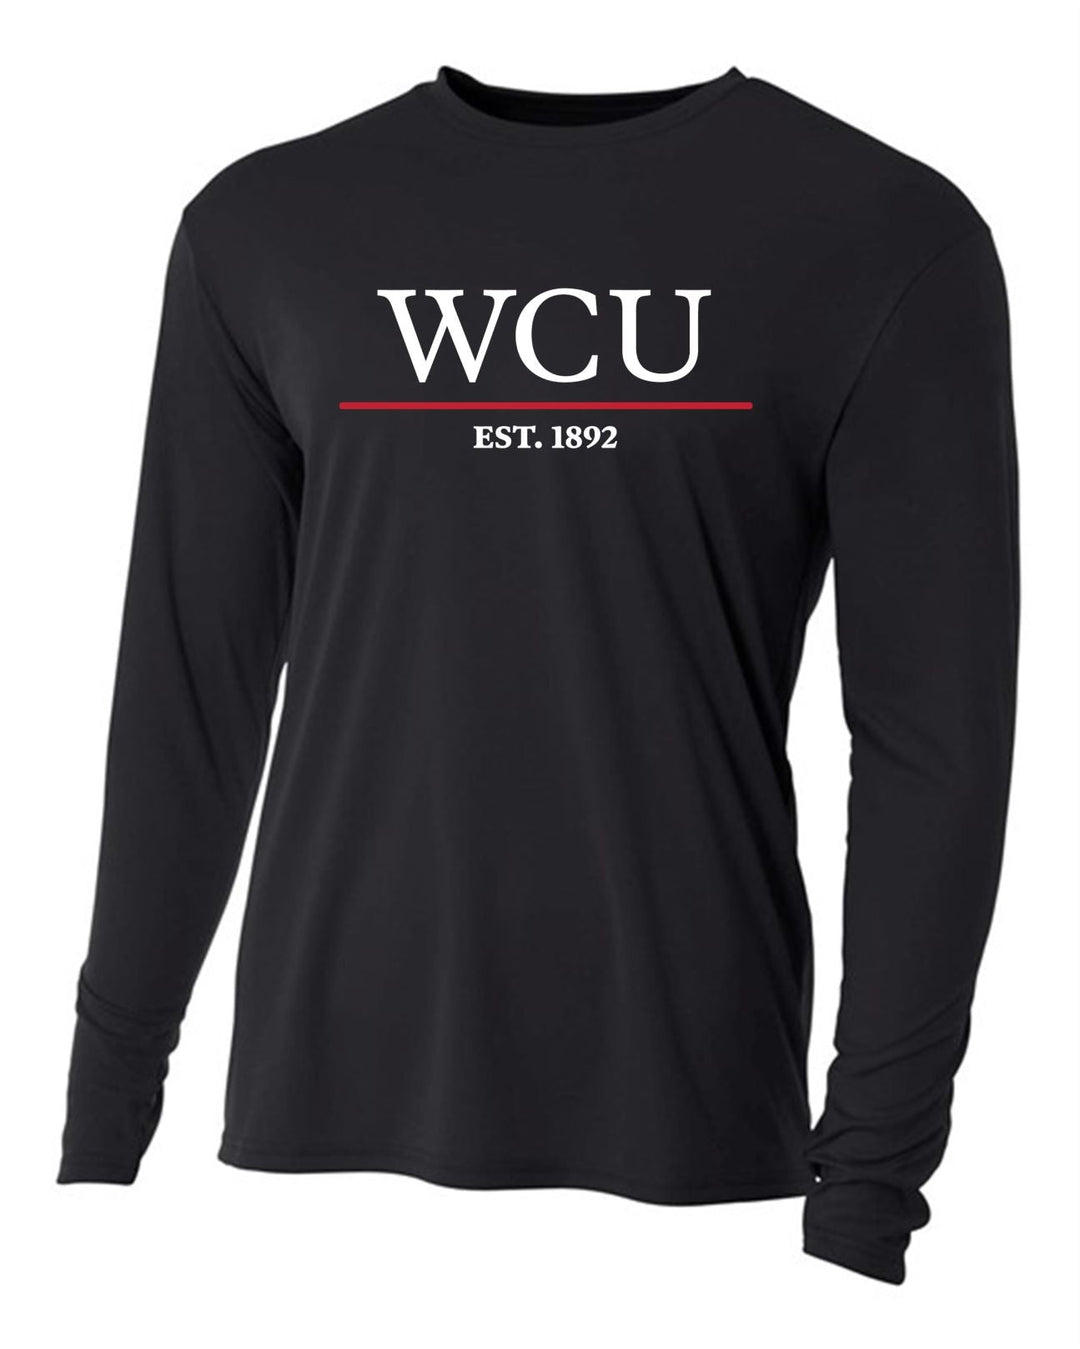 WCU Baton Rouge Youth Long-Sleeve Performance Shirt WCU BR Black Youth Small - Third Coast Soccer